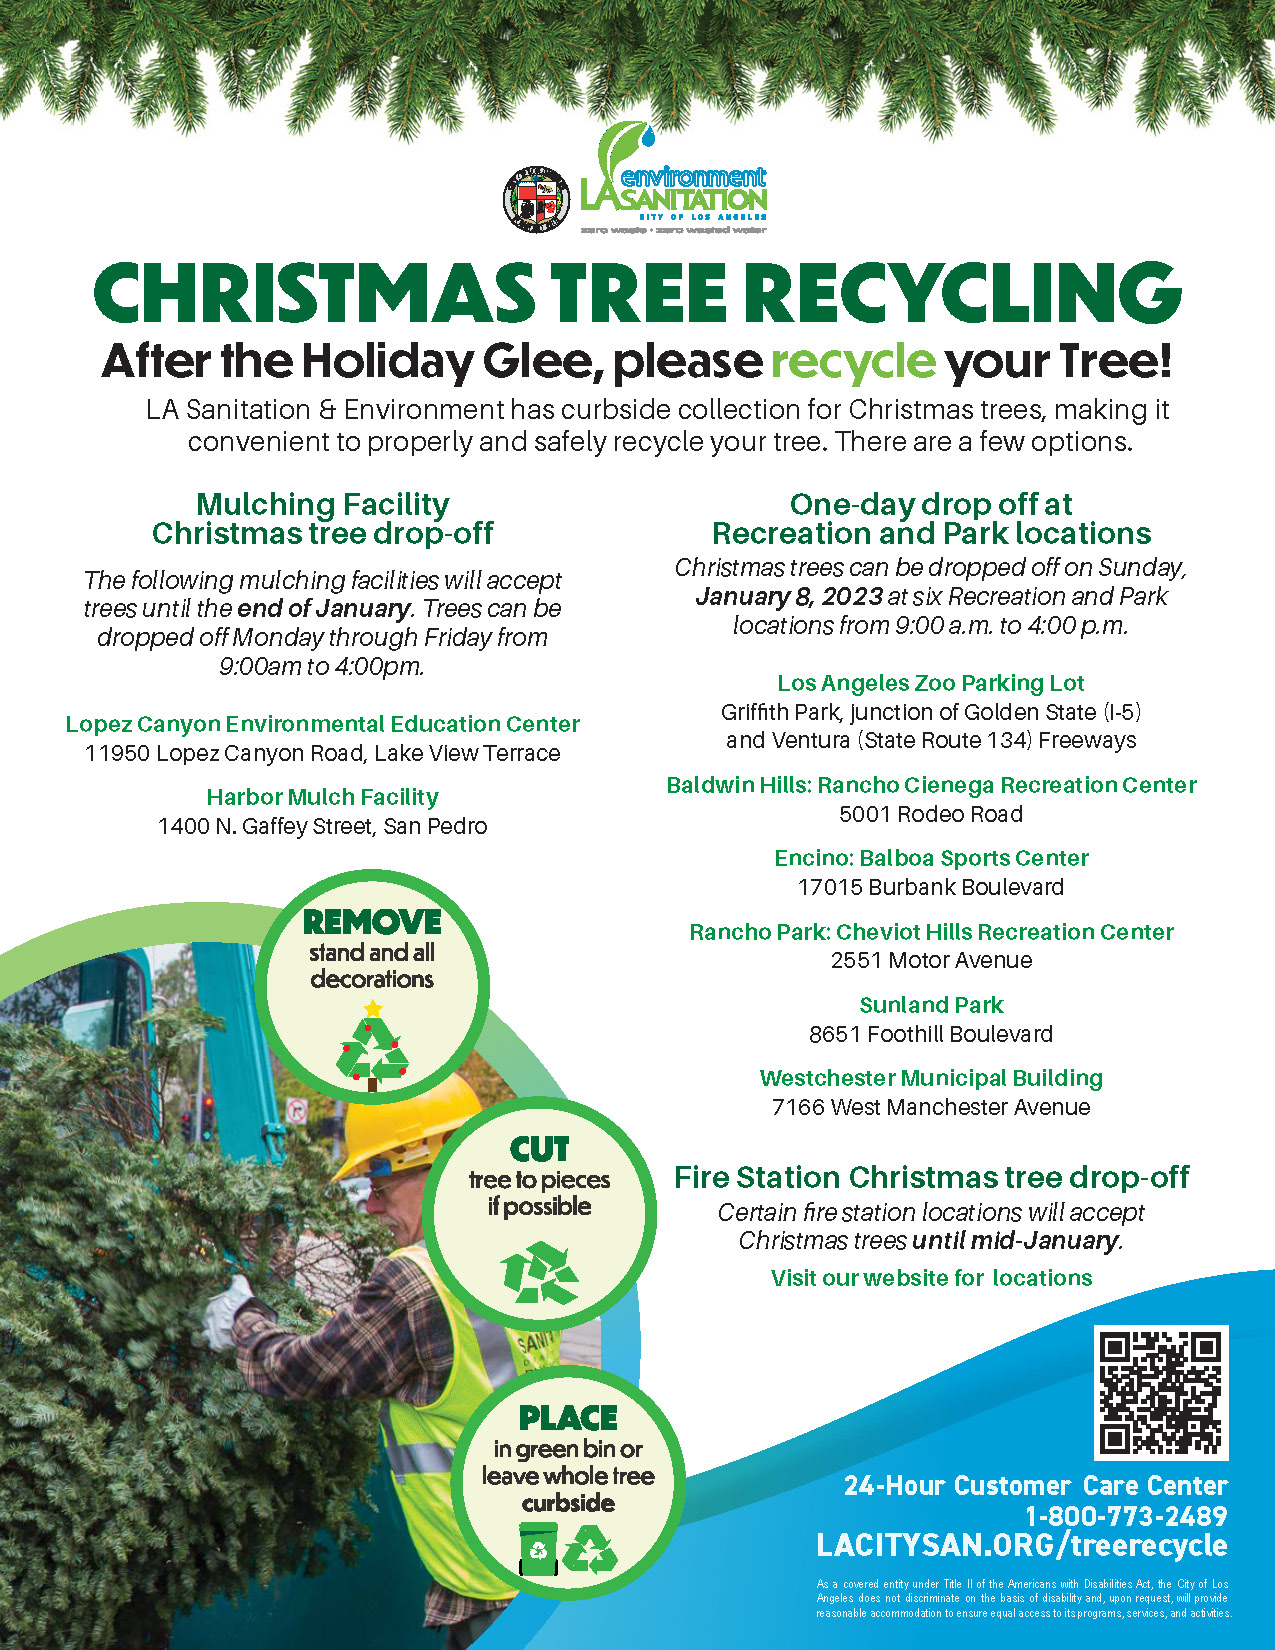 LASAN recycles Christmas trees!